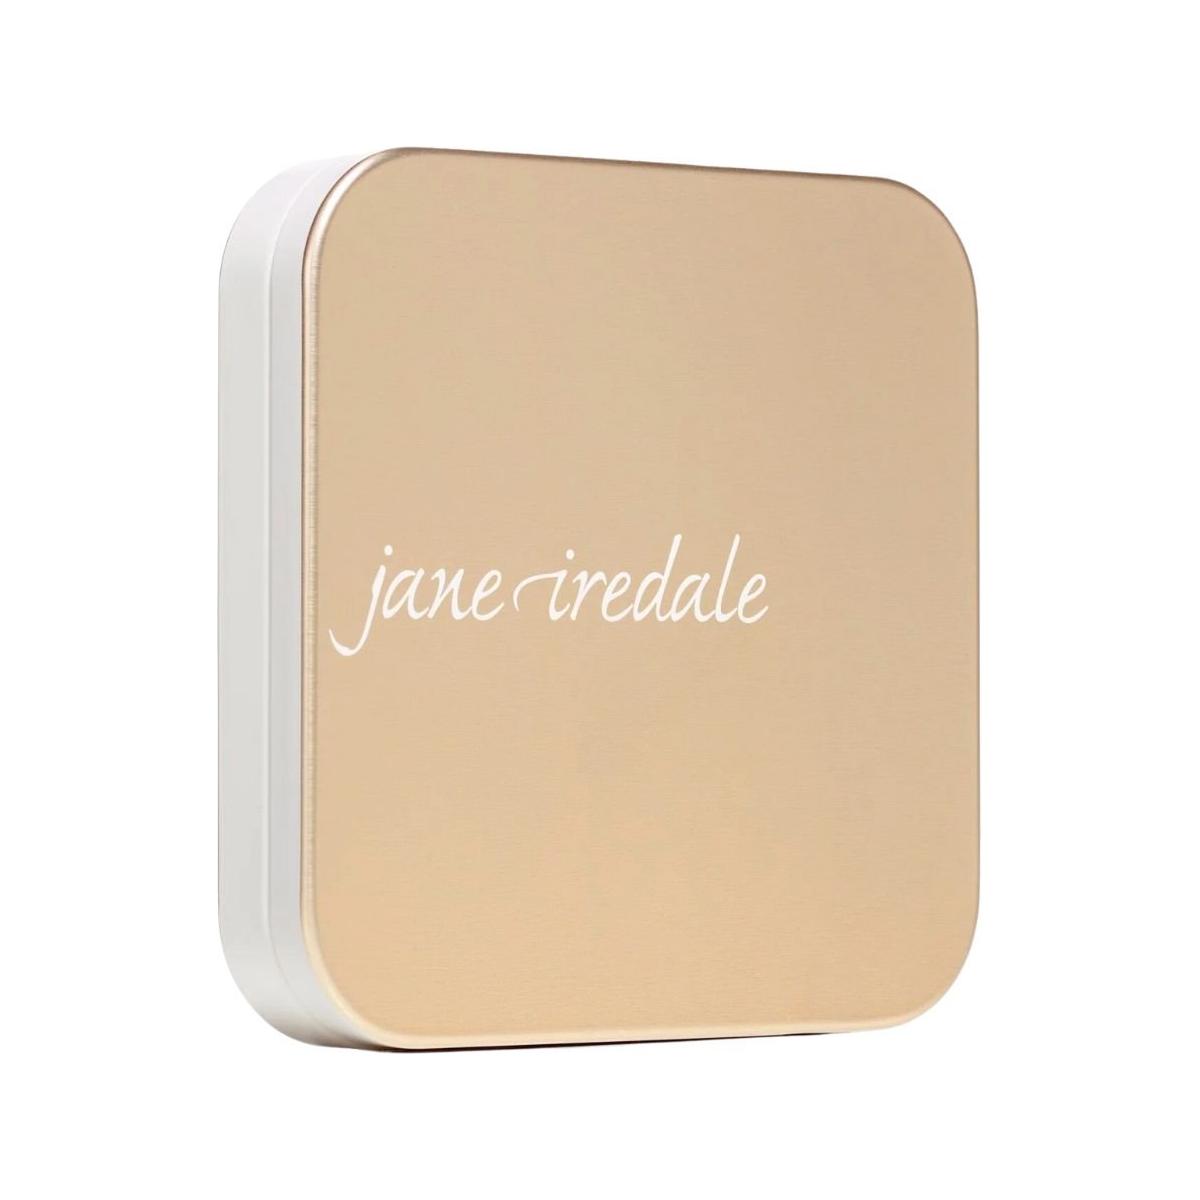 Jane Iredale | Refillable Empty Compact - DG International Ventures Limited